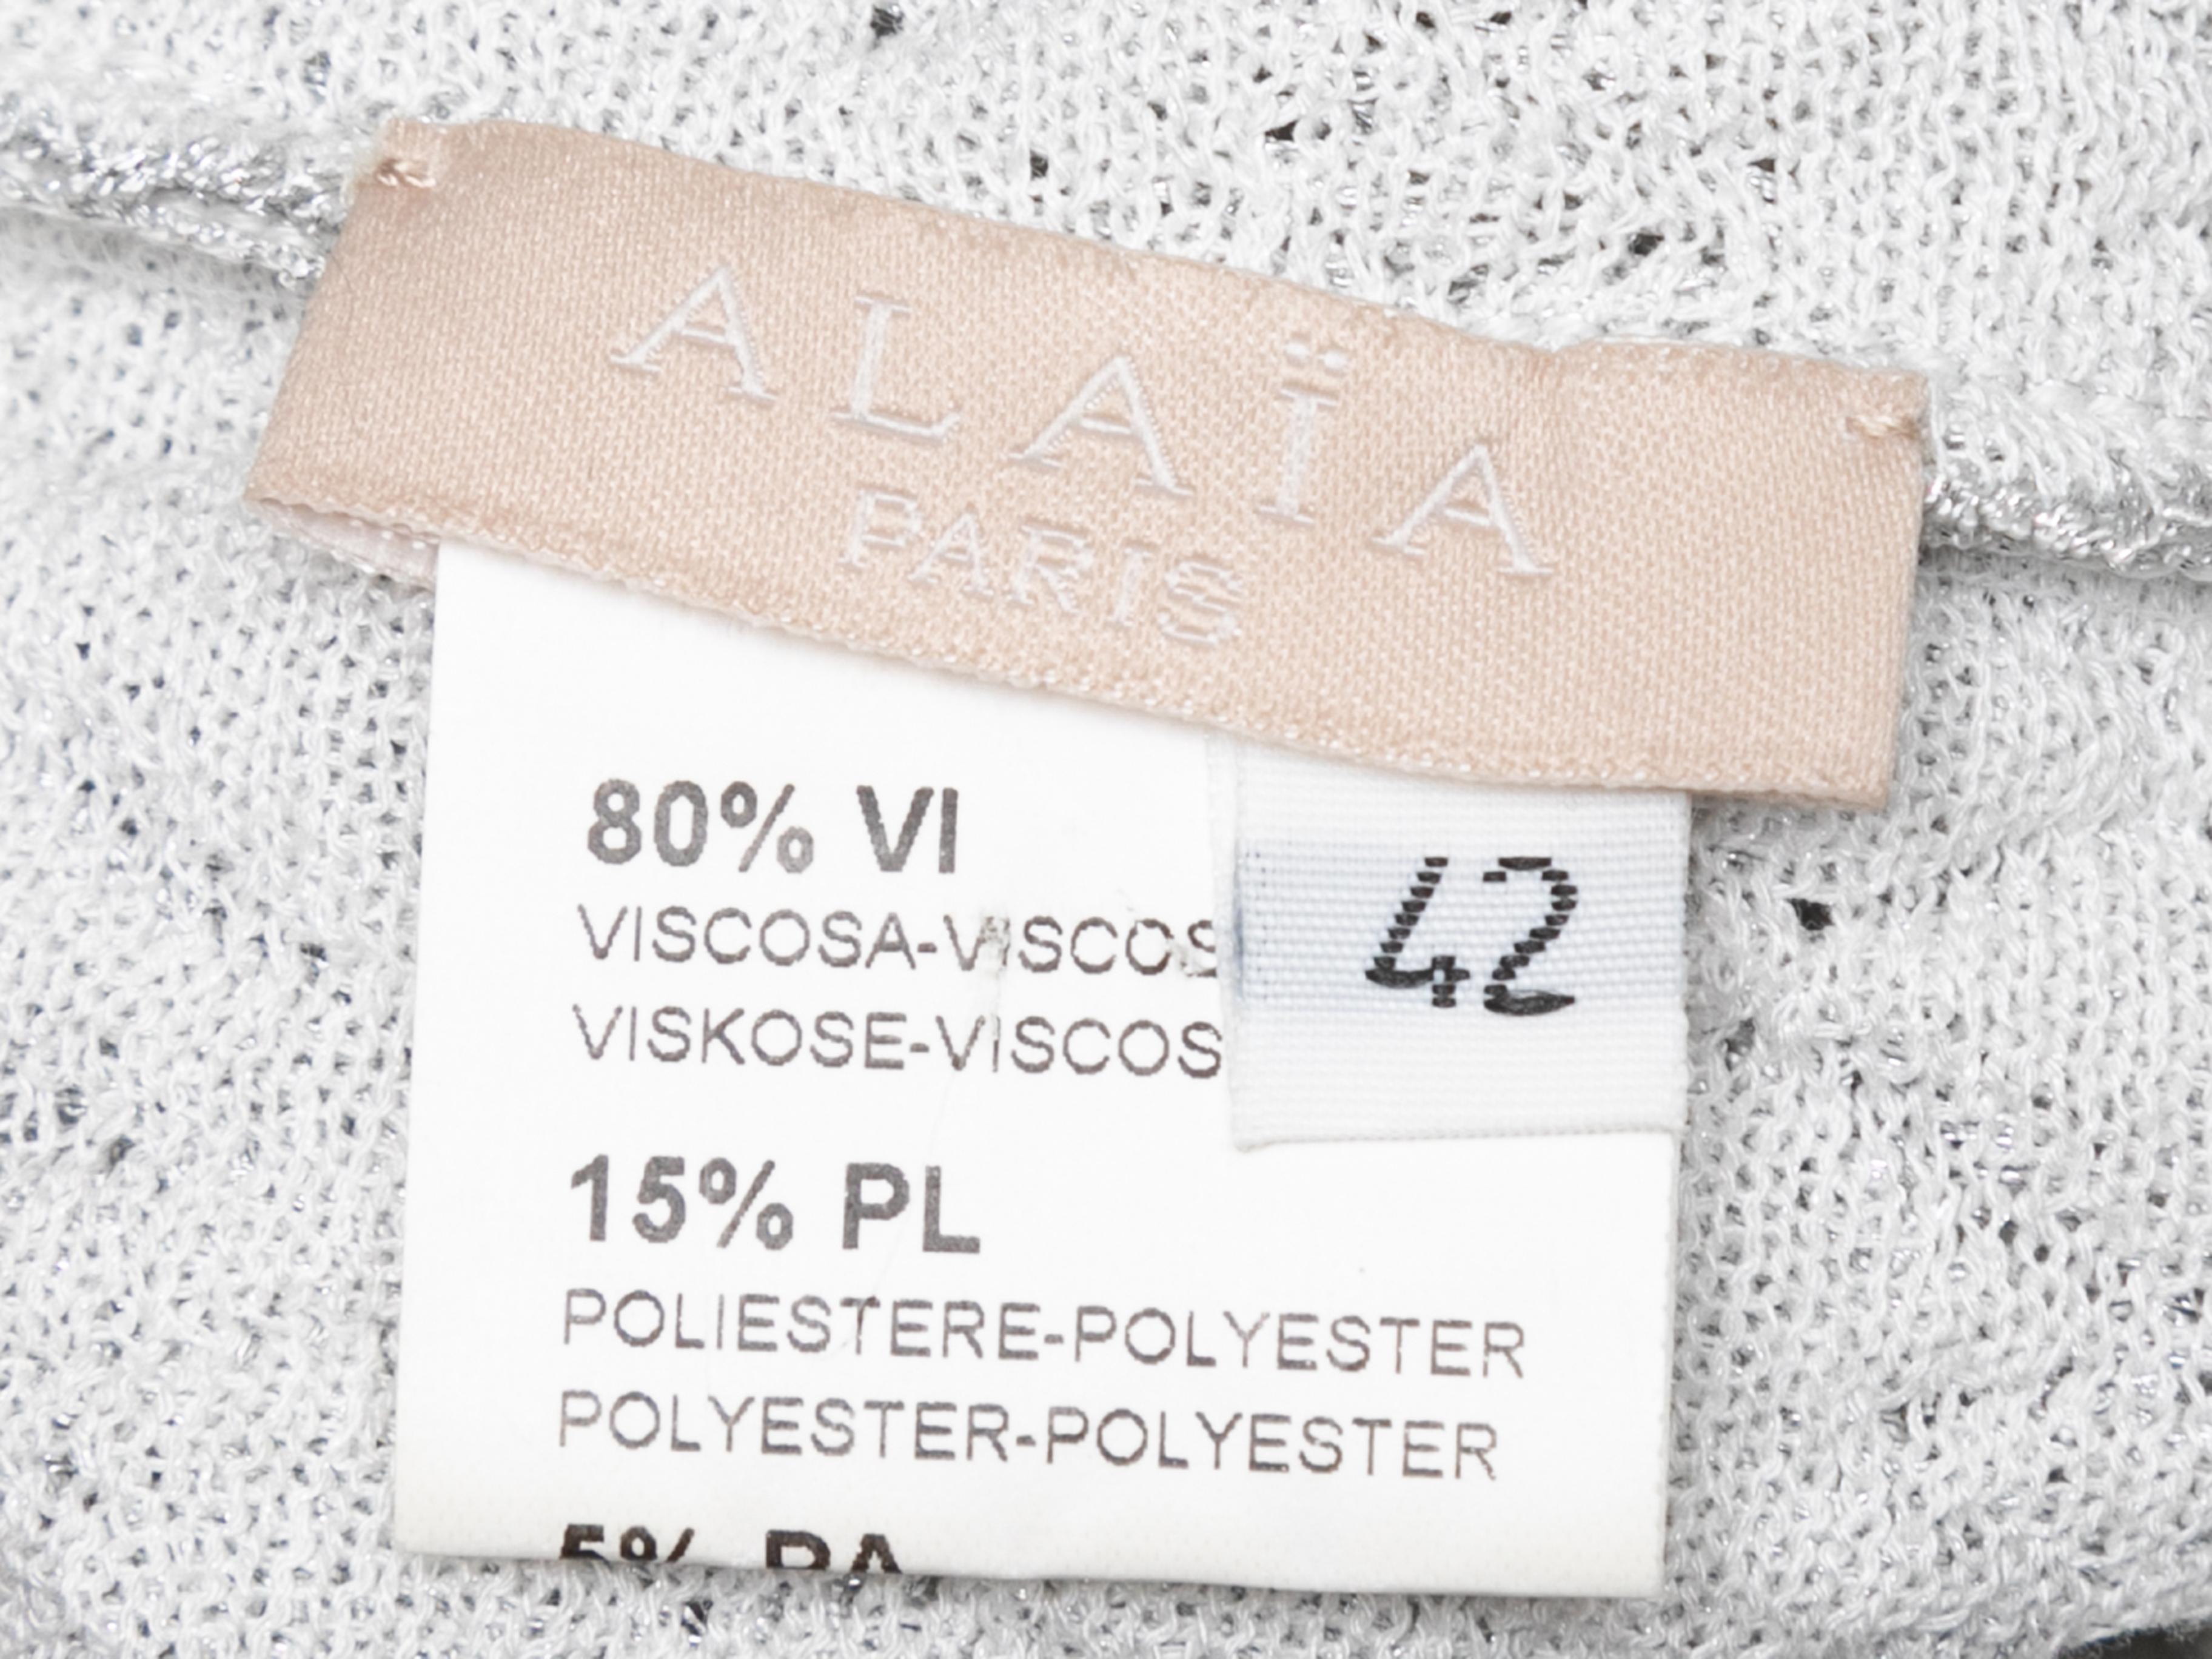 Silver knit sleeveless bodycon dress by Alaia. Scoop neckline. 26